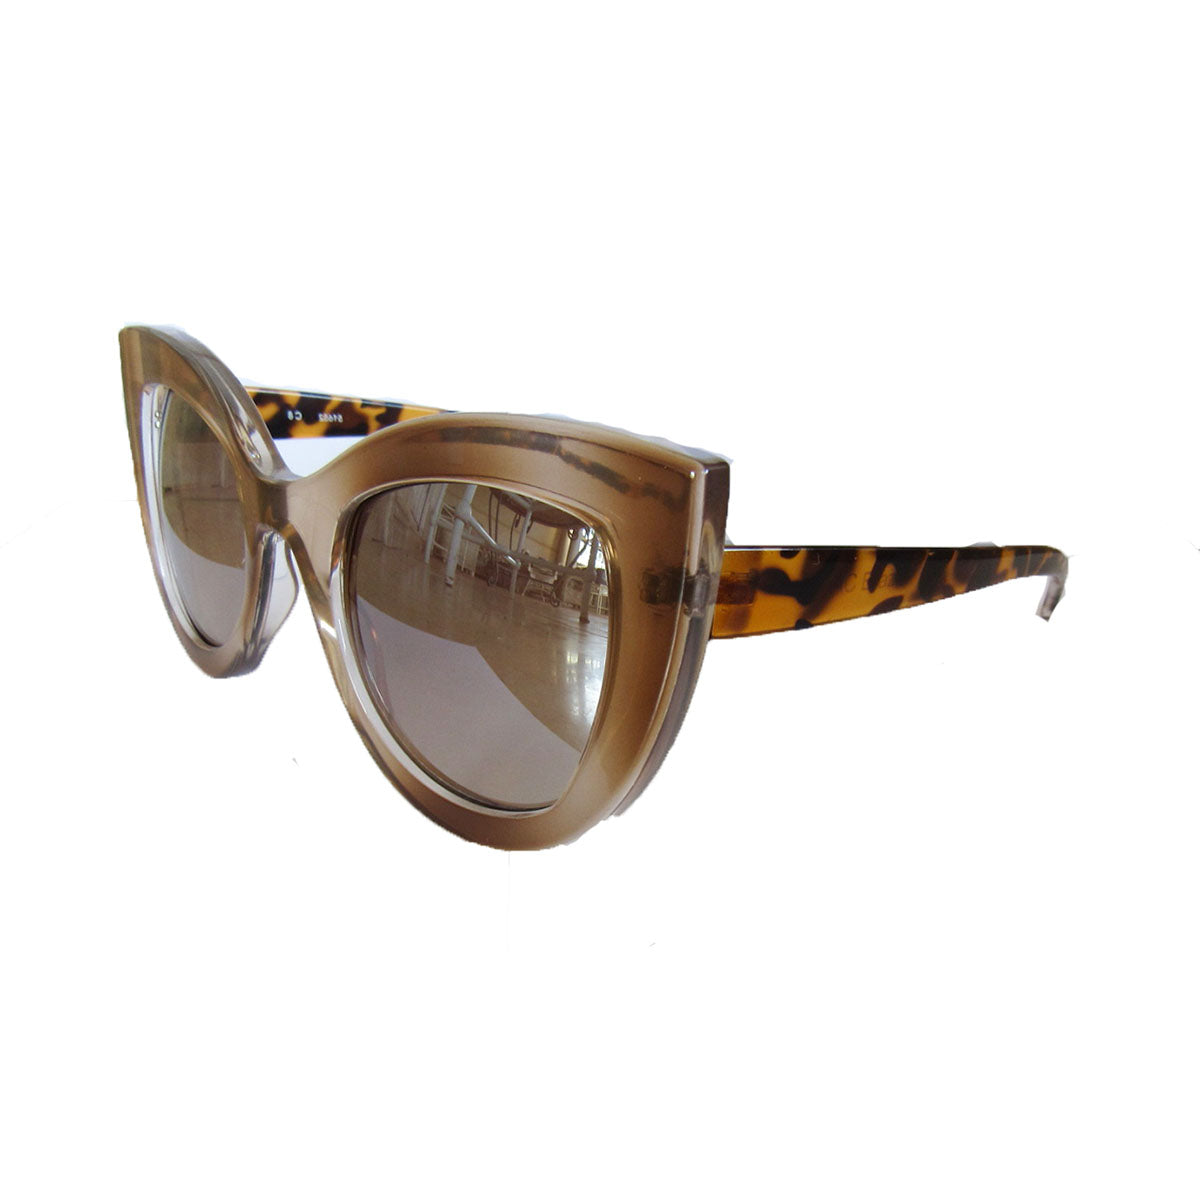 Cat Eye Honey Coloured Sunglasses w/ Silver Mirrored Lenses